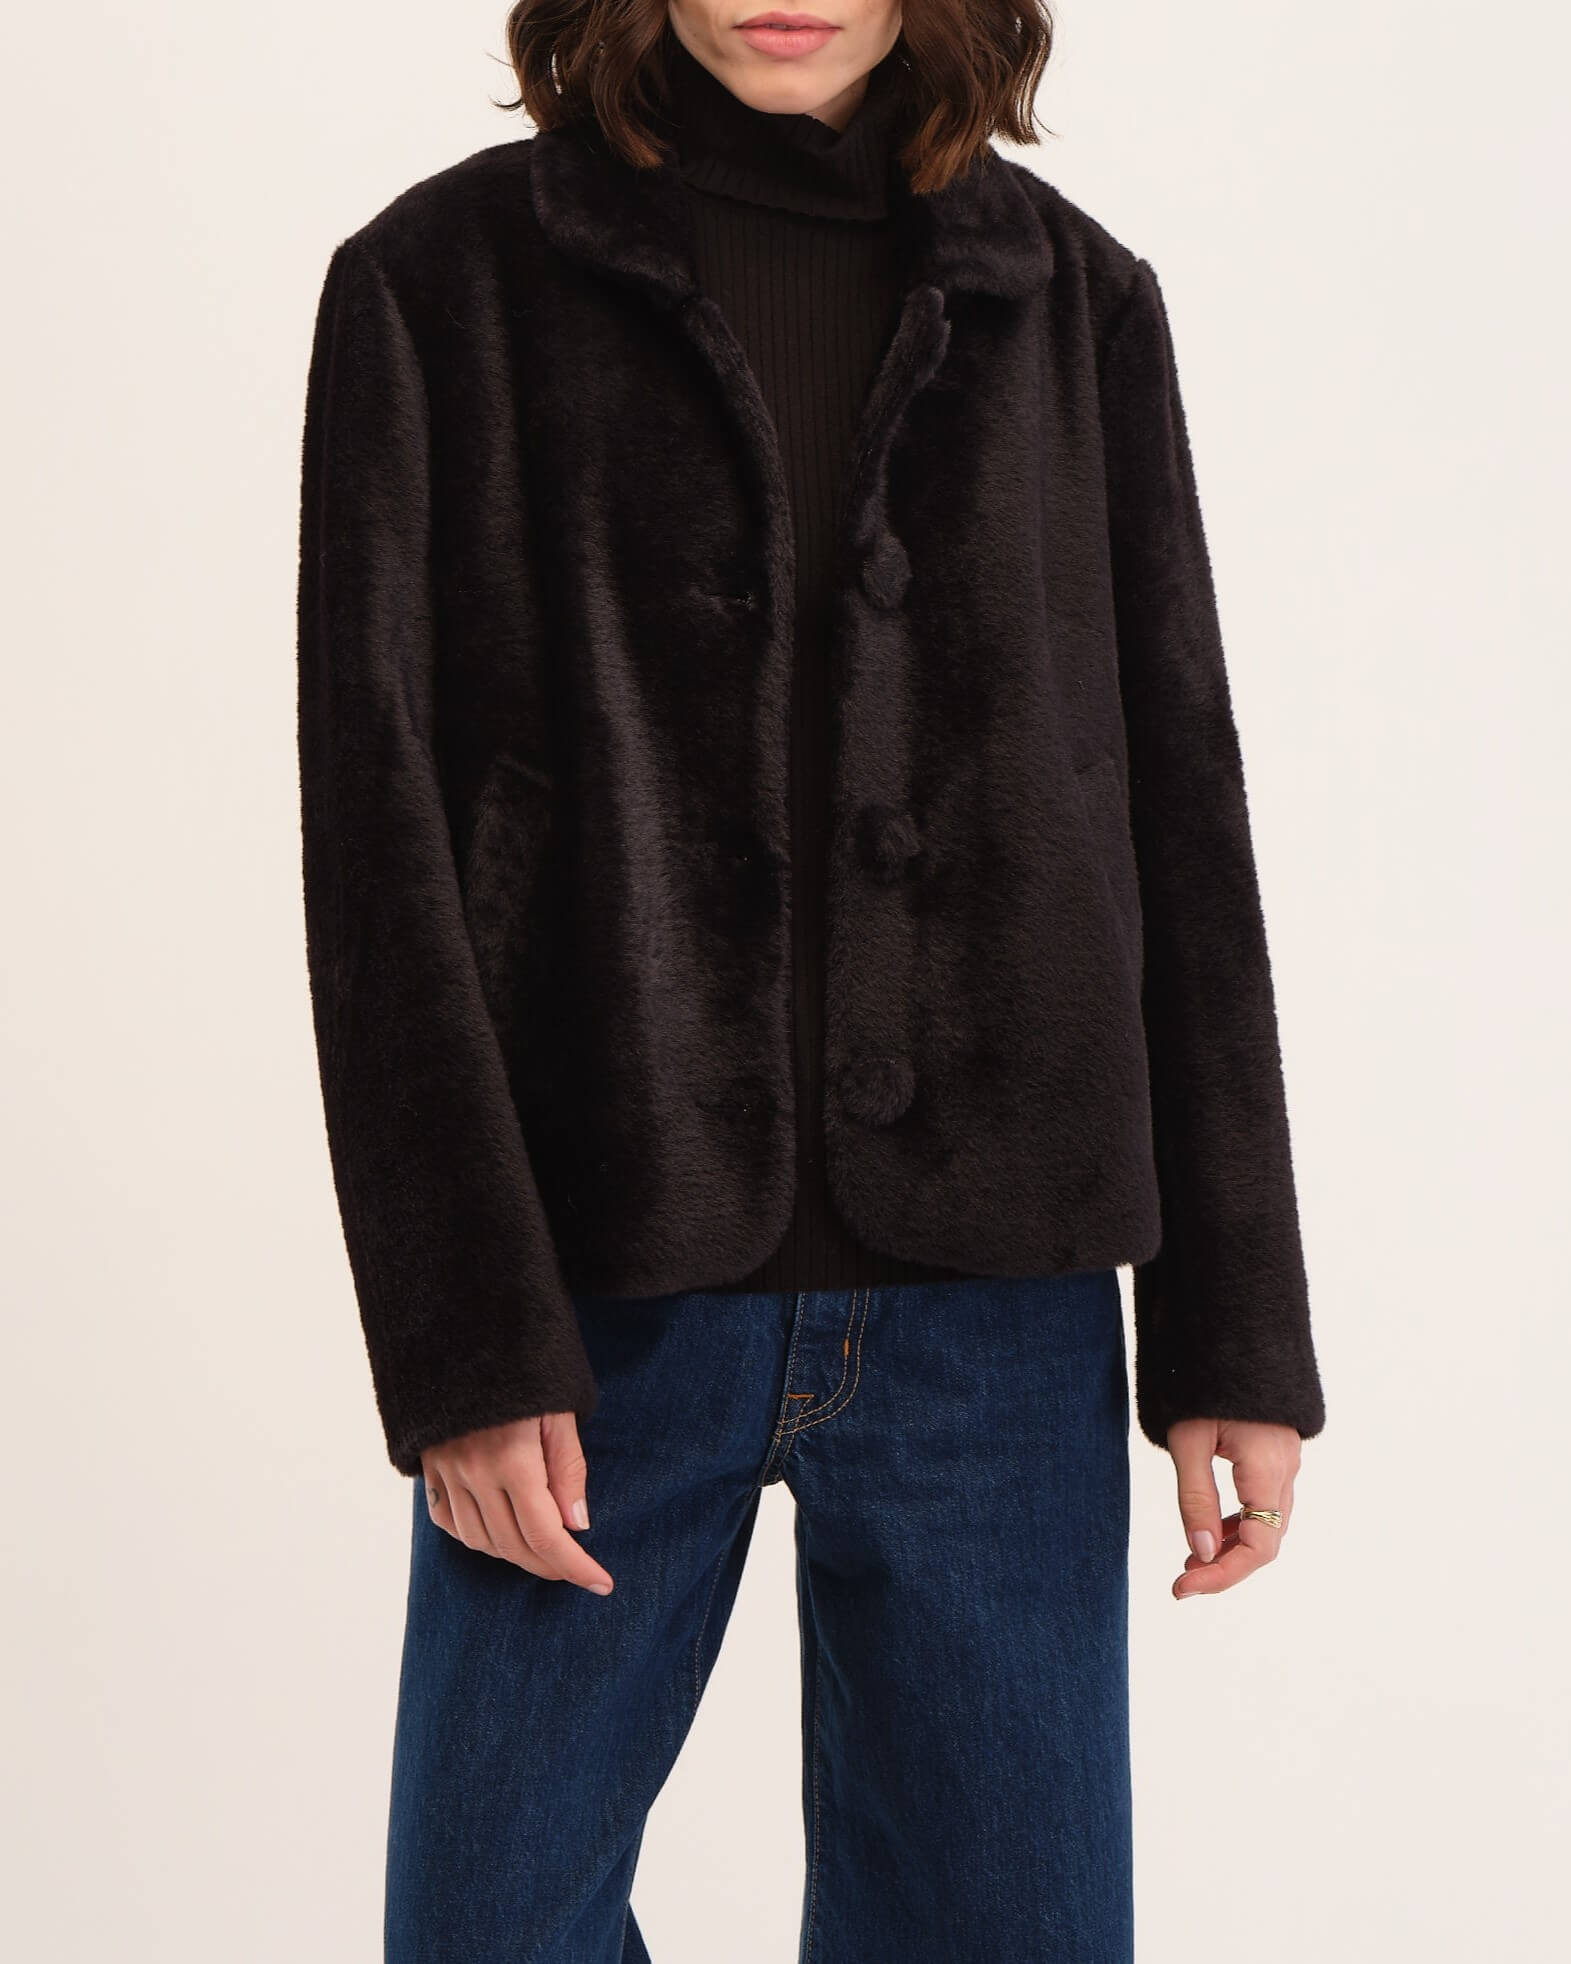 Shop Faux Fur Button Front Collared Jacket | Elie Elie Tahari | JANE + MERCER